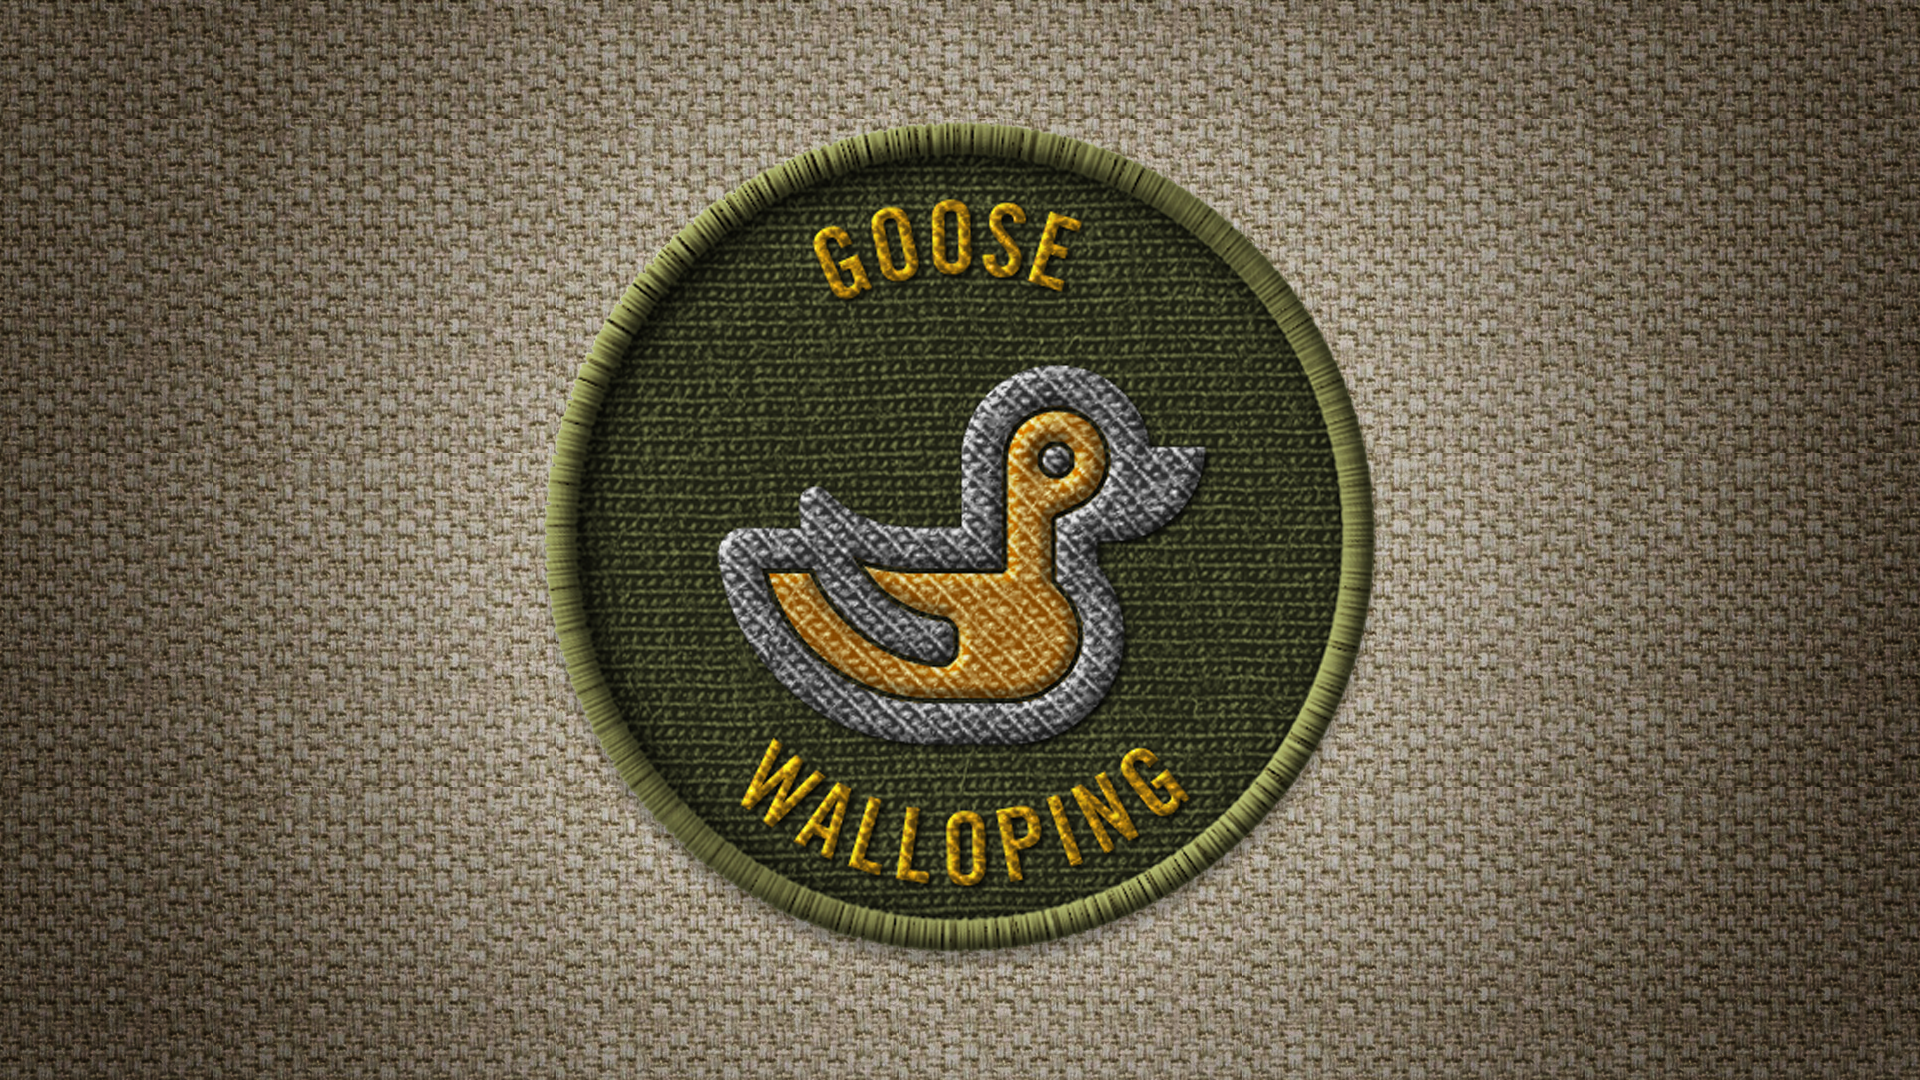 Icon for Goose walloper